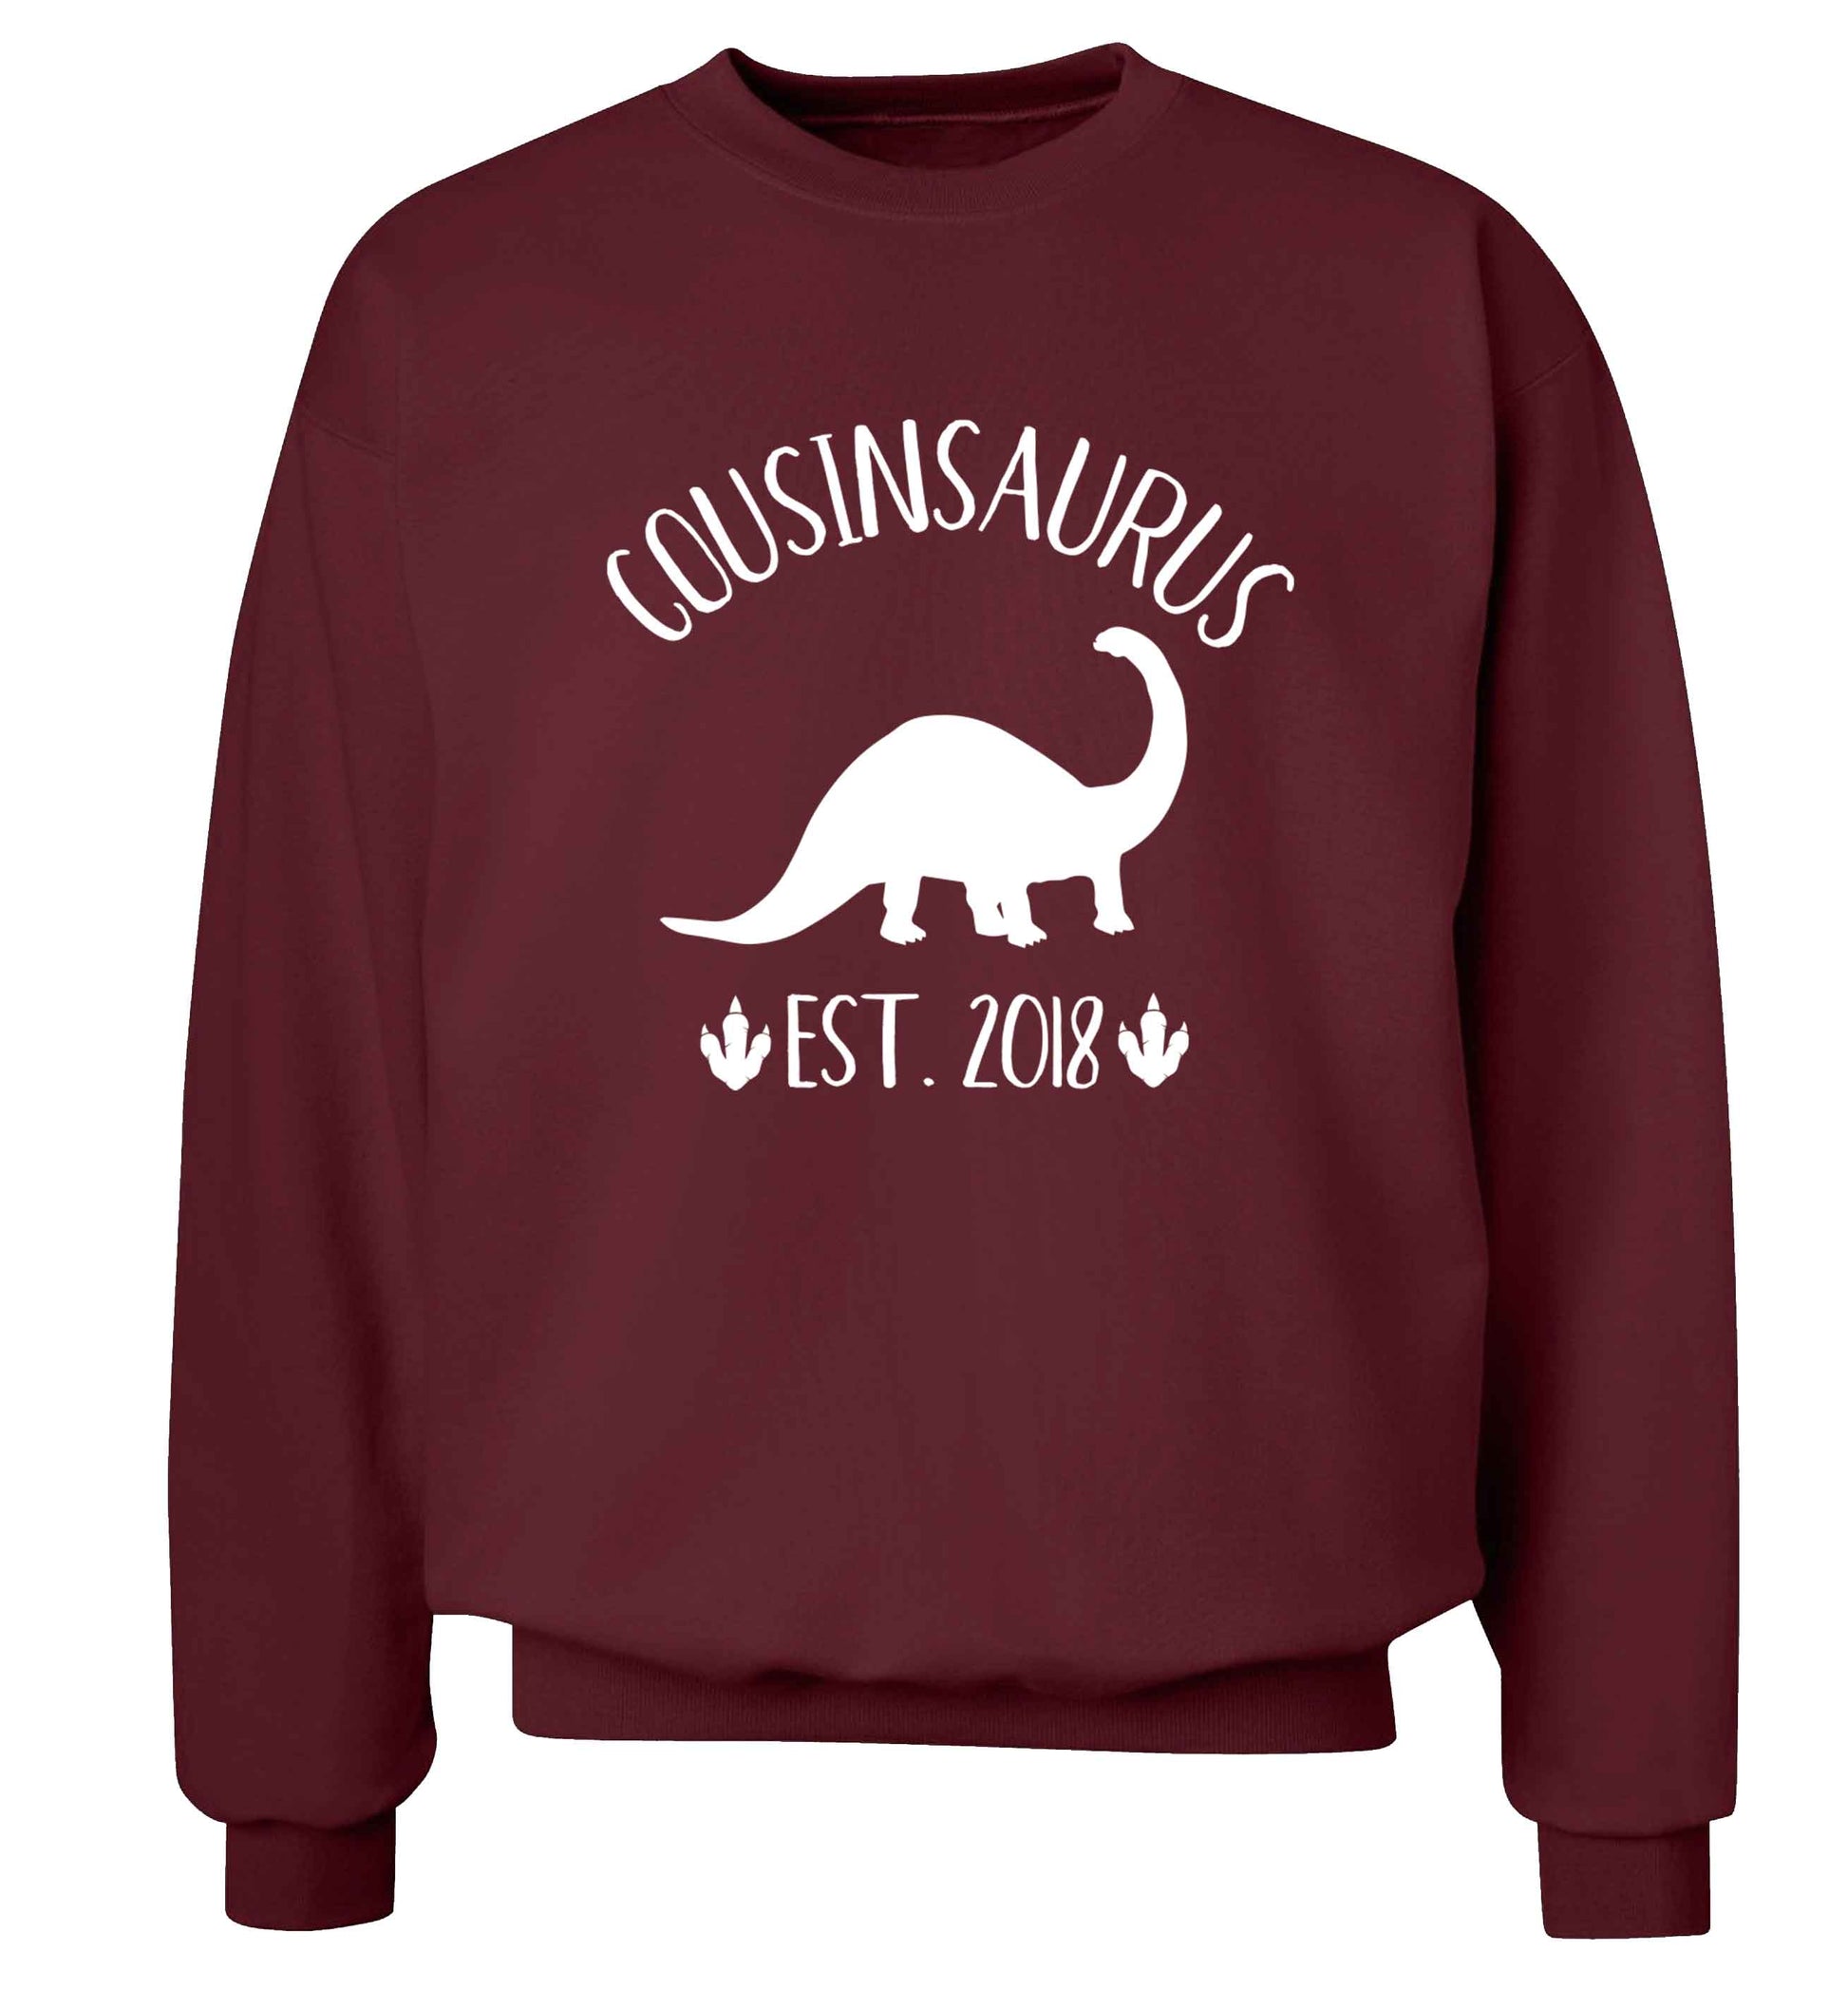 Personalised cousinsaurus since (custom date) Adult's unisex maroon Sweater 2XL